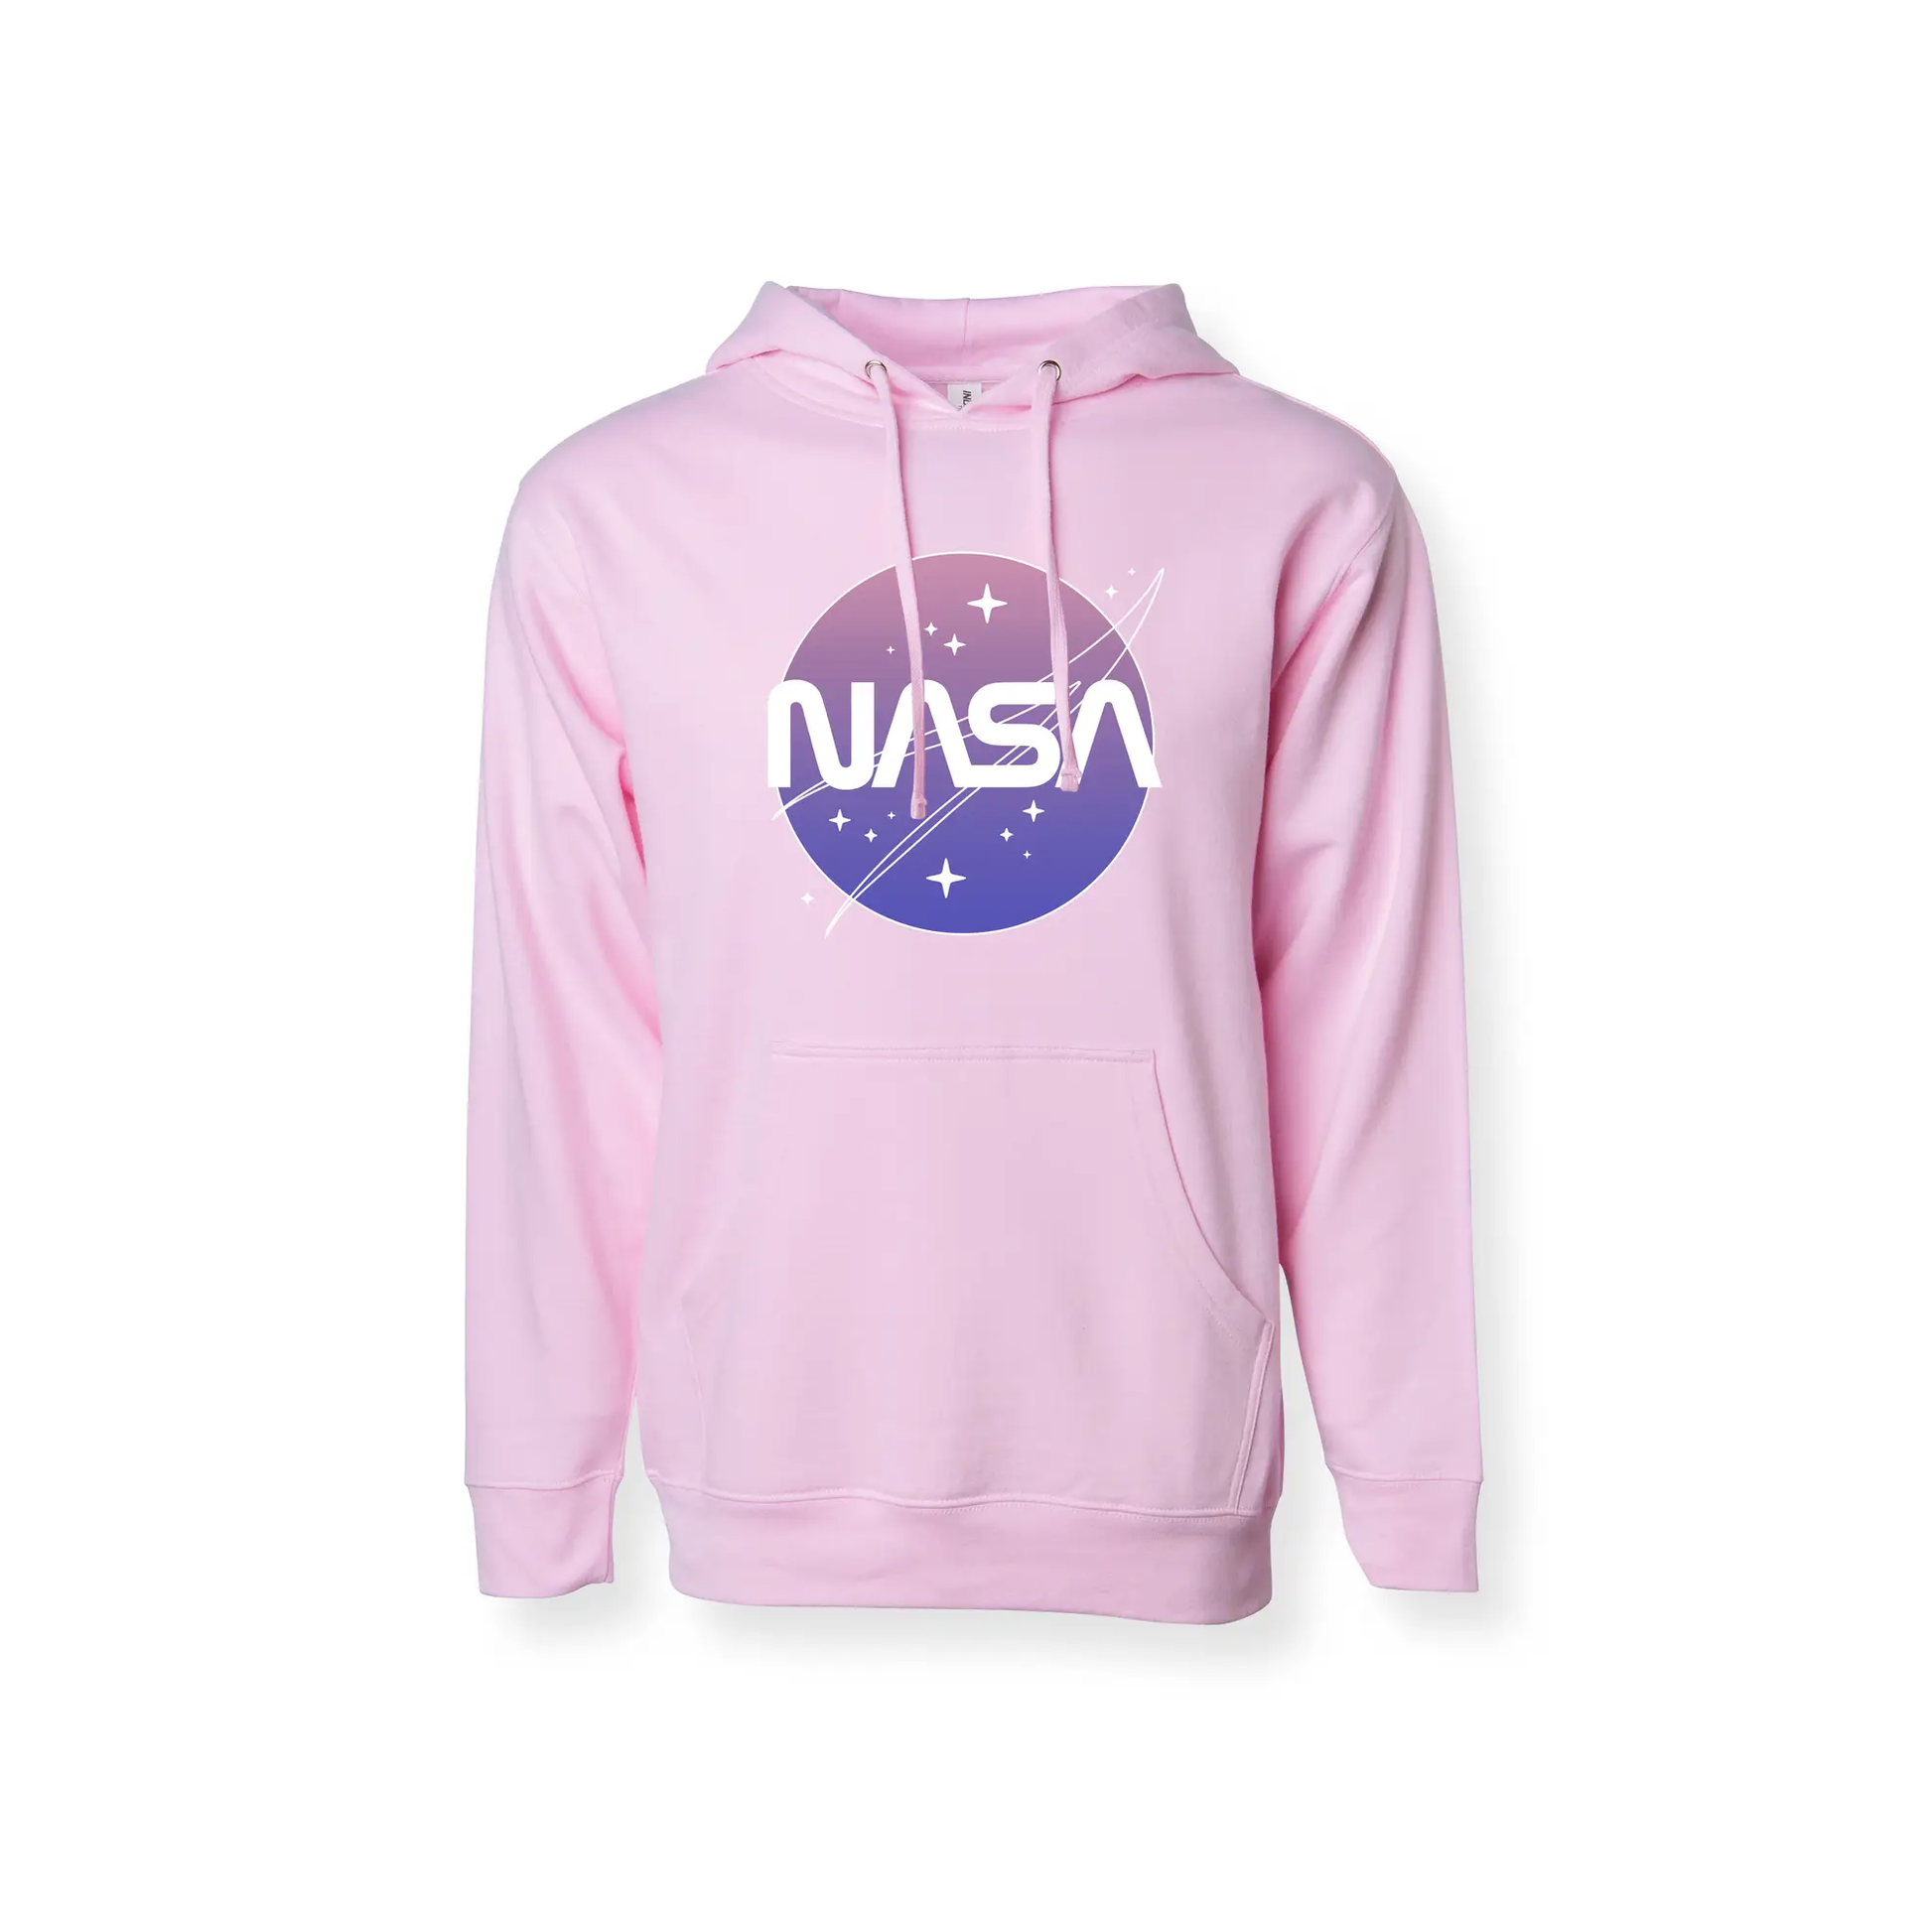 a pink nasa sweatshirt with the nasa logo on it